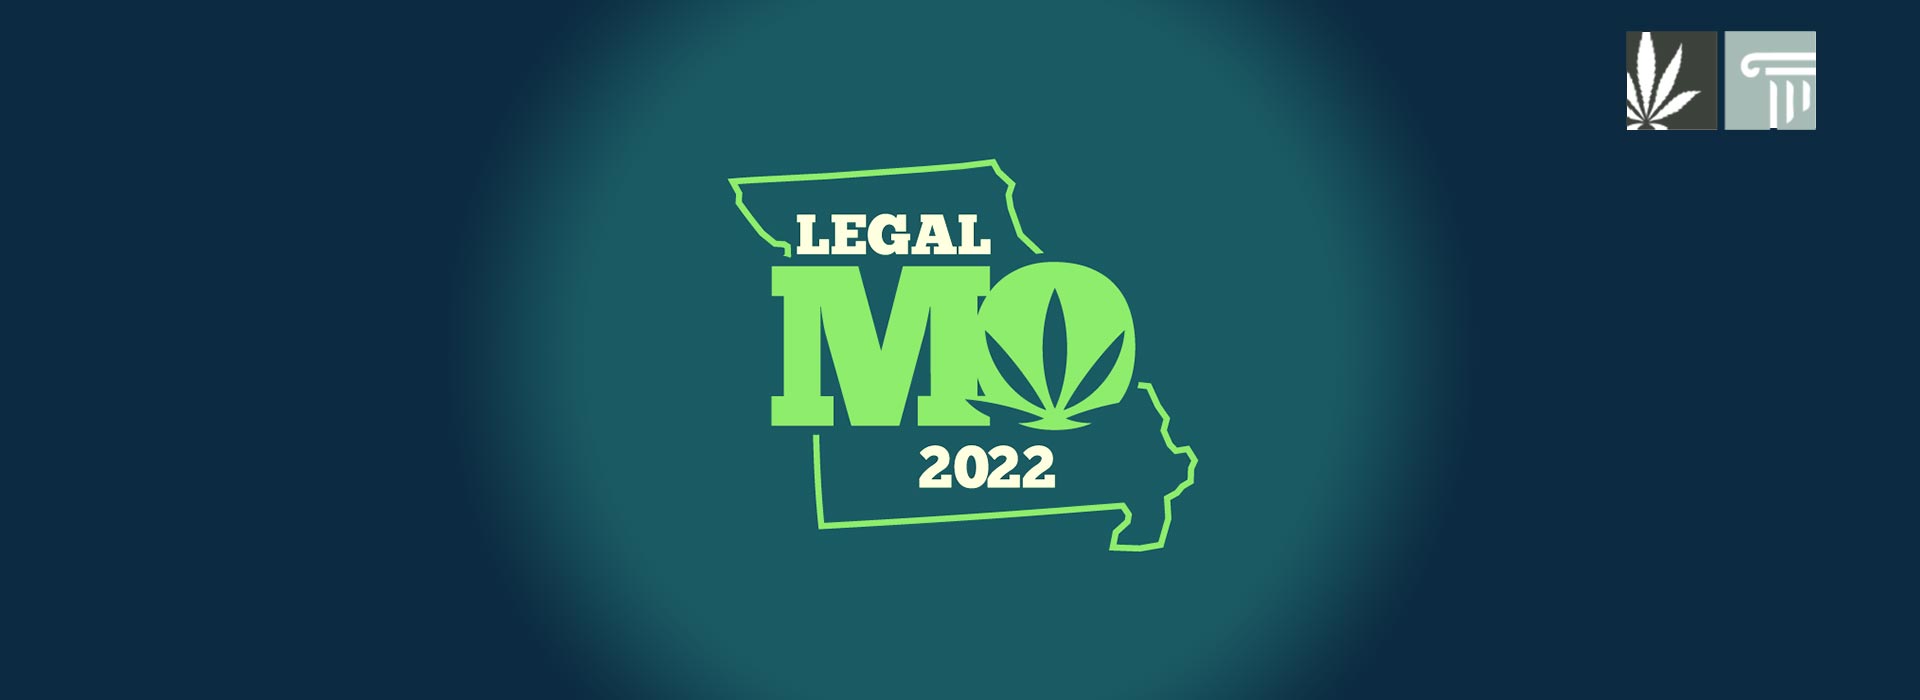 missouri marijuana legalization ballot measure